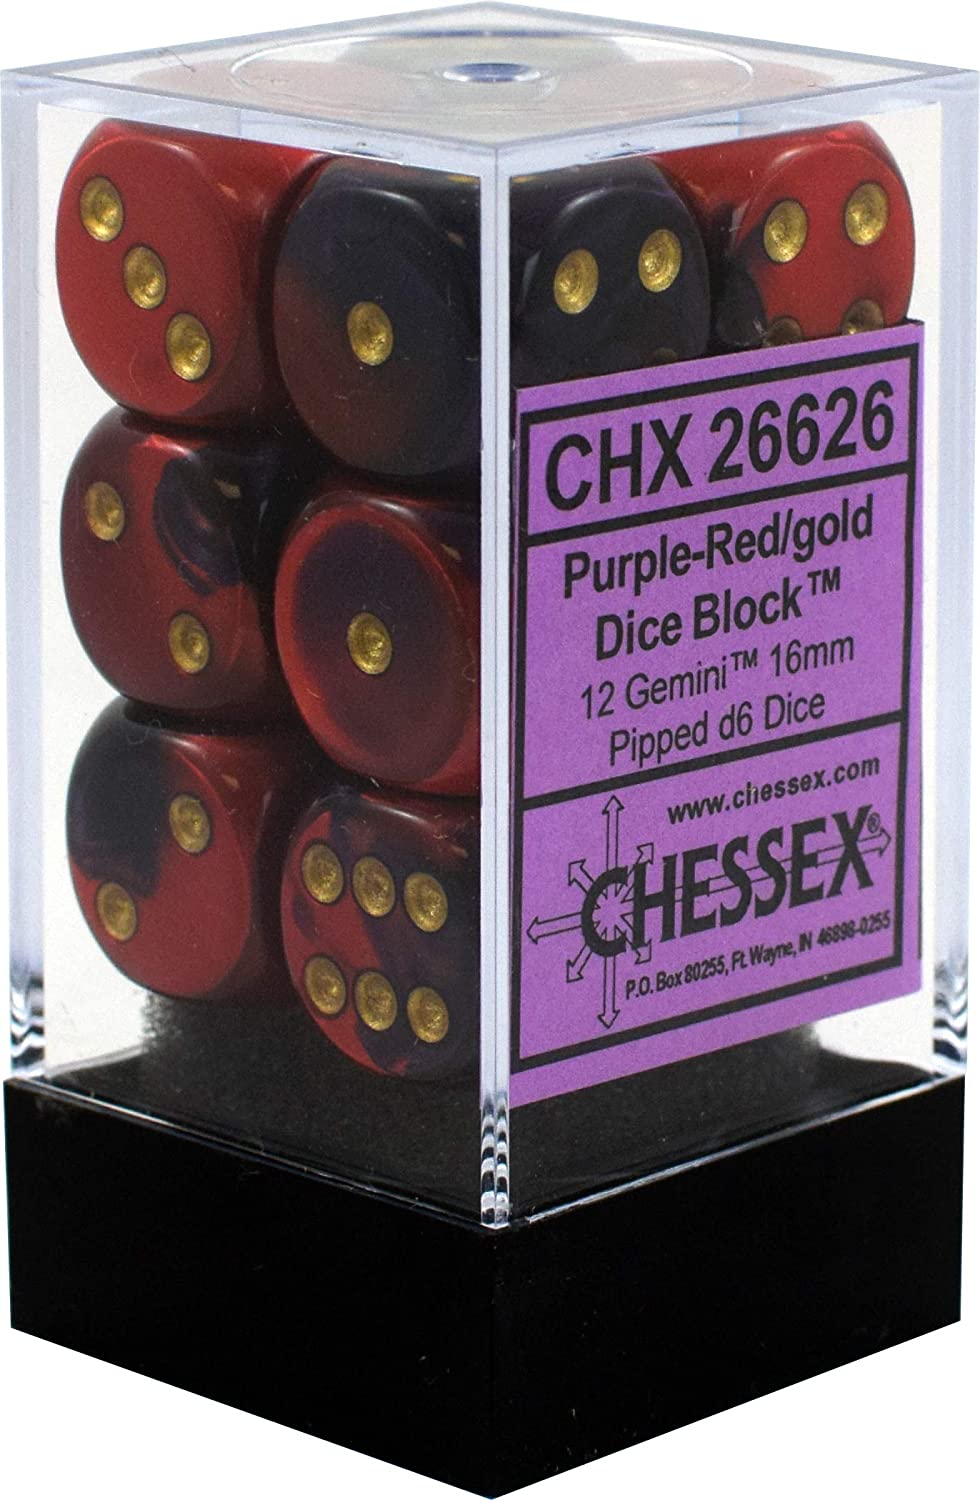 Chessex Dice: D6 Block 16mm - Gemini - Purple-Red with Gold (CHX 26626) - Gamescape